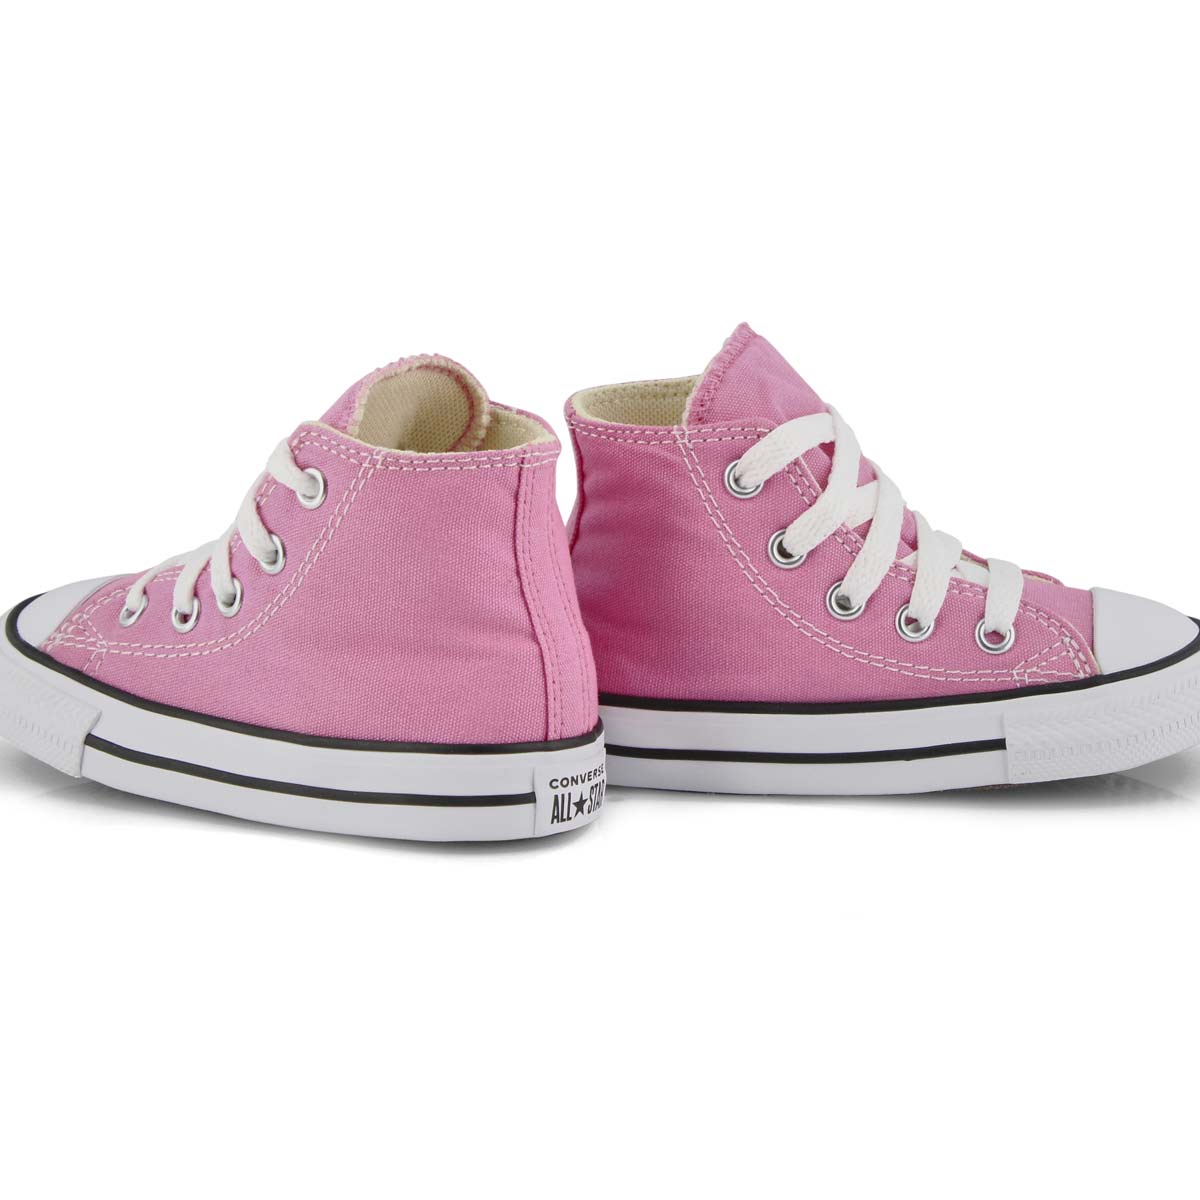 Infants' Chuck Taylor All Star Hi Top Sneaker - Pink